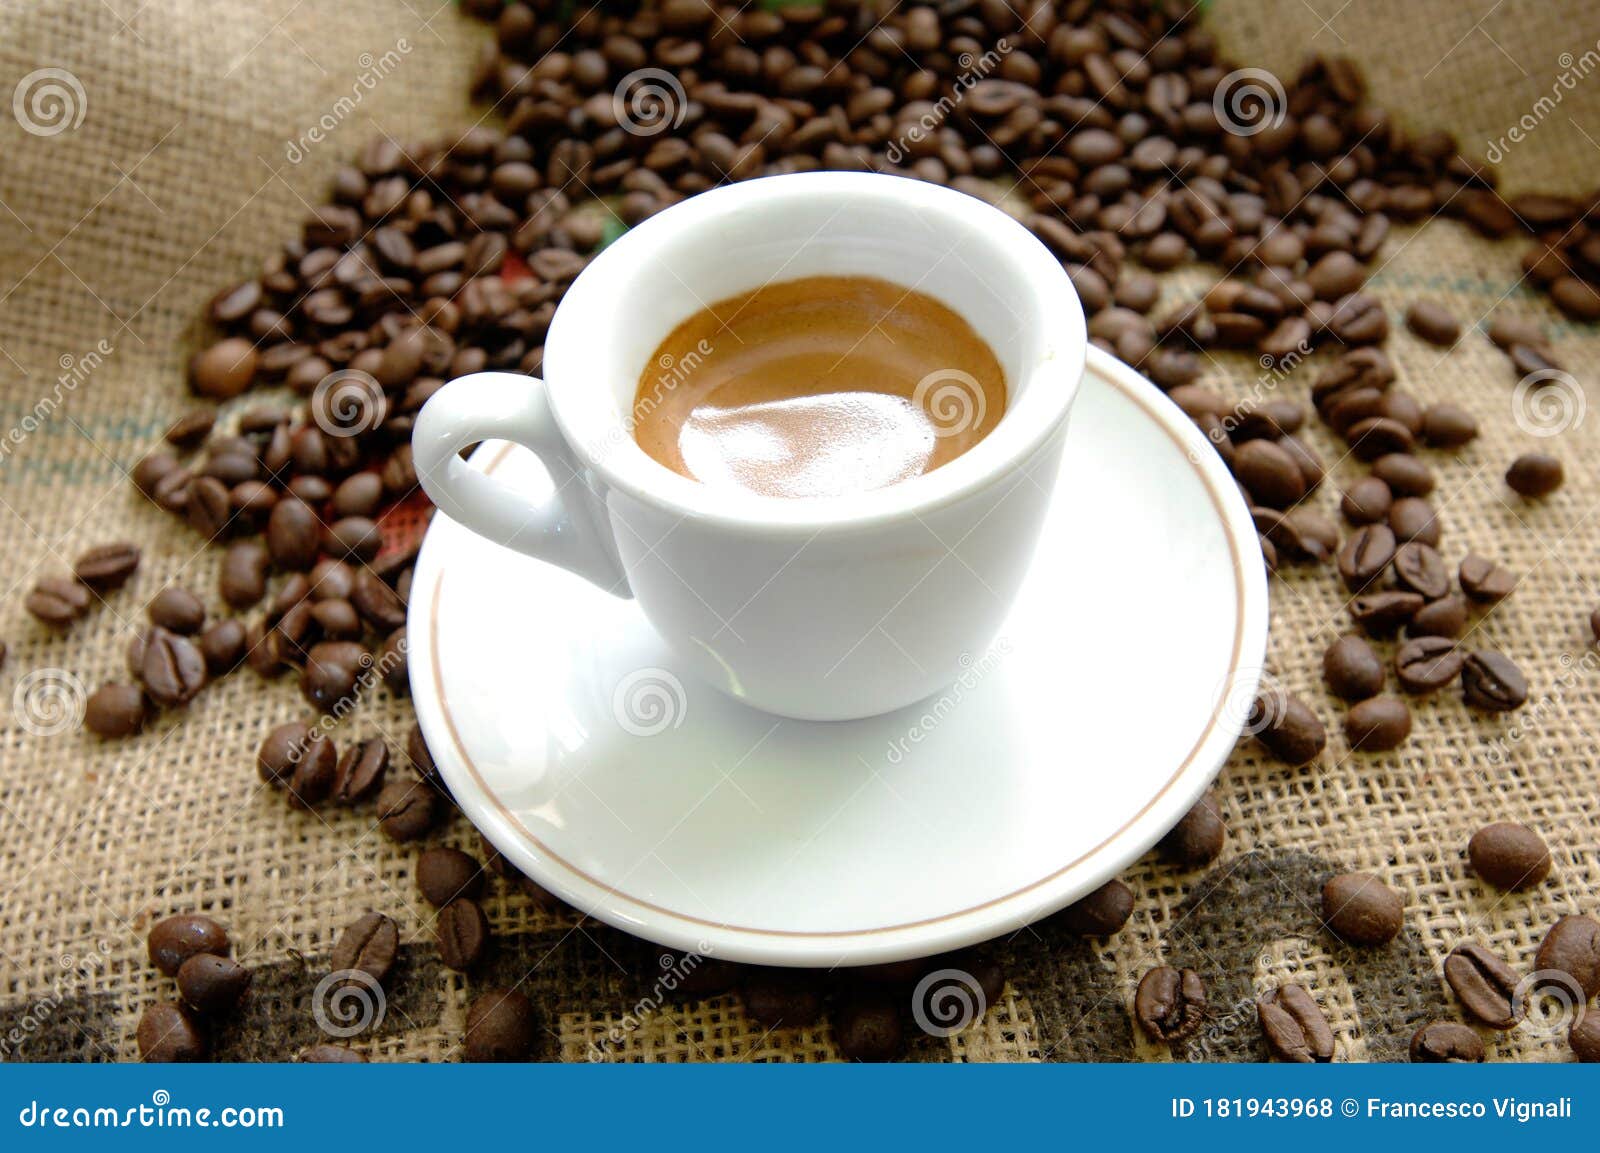 Italian Espresso Cup Near Coffee Beans on a Yute Sack Stock Photo ...